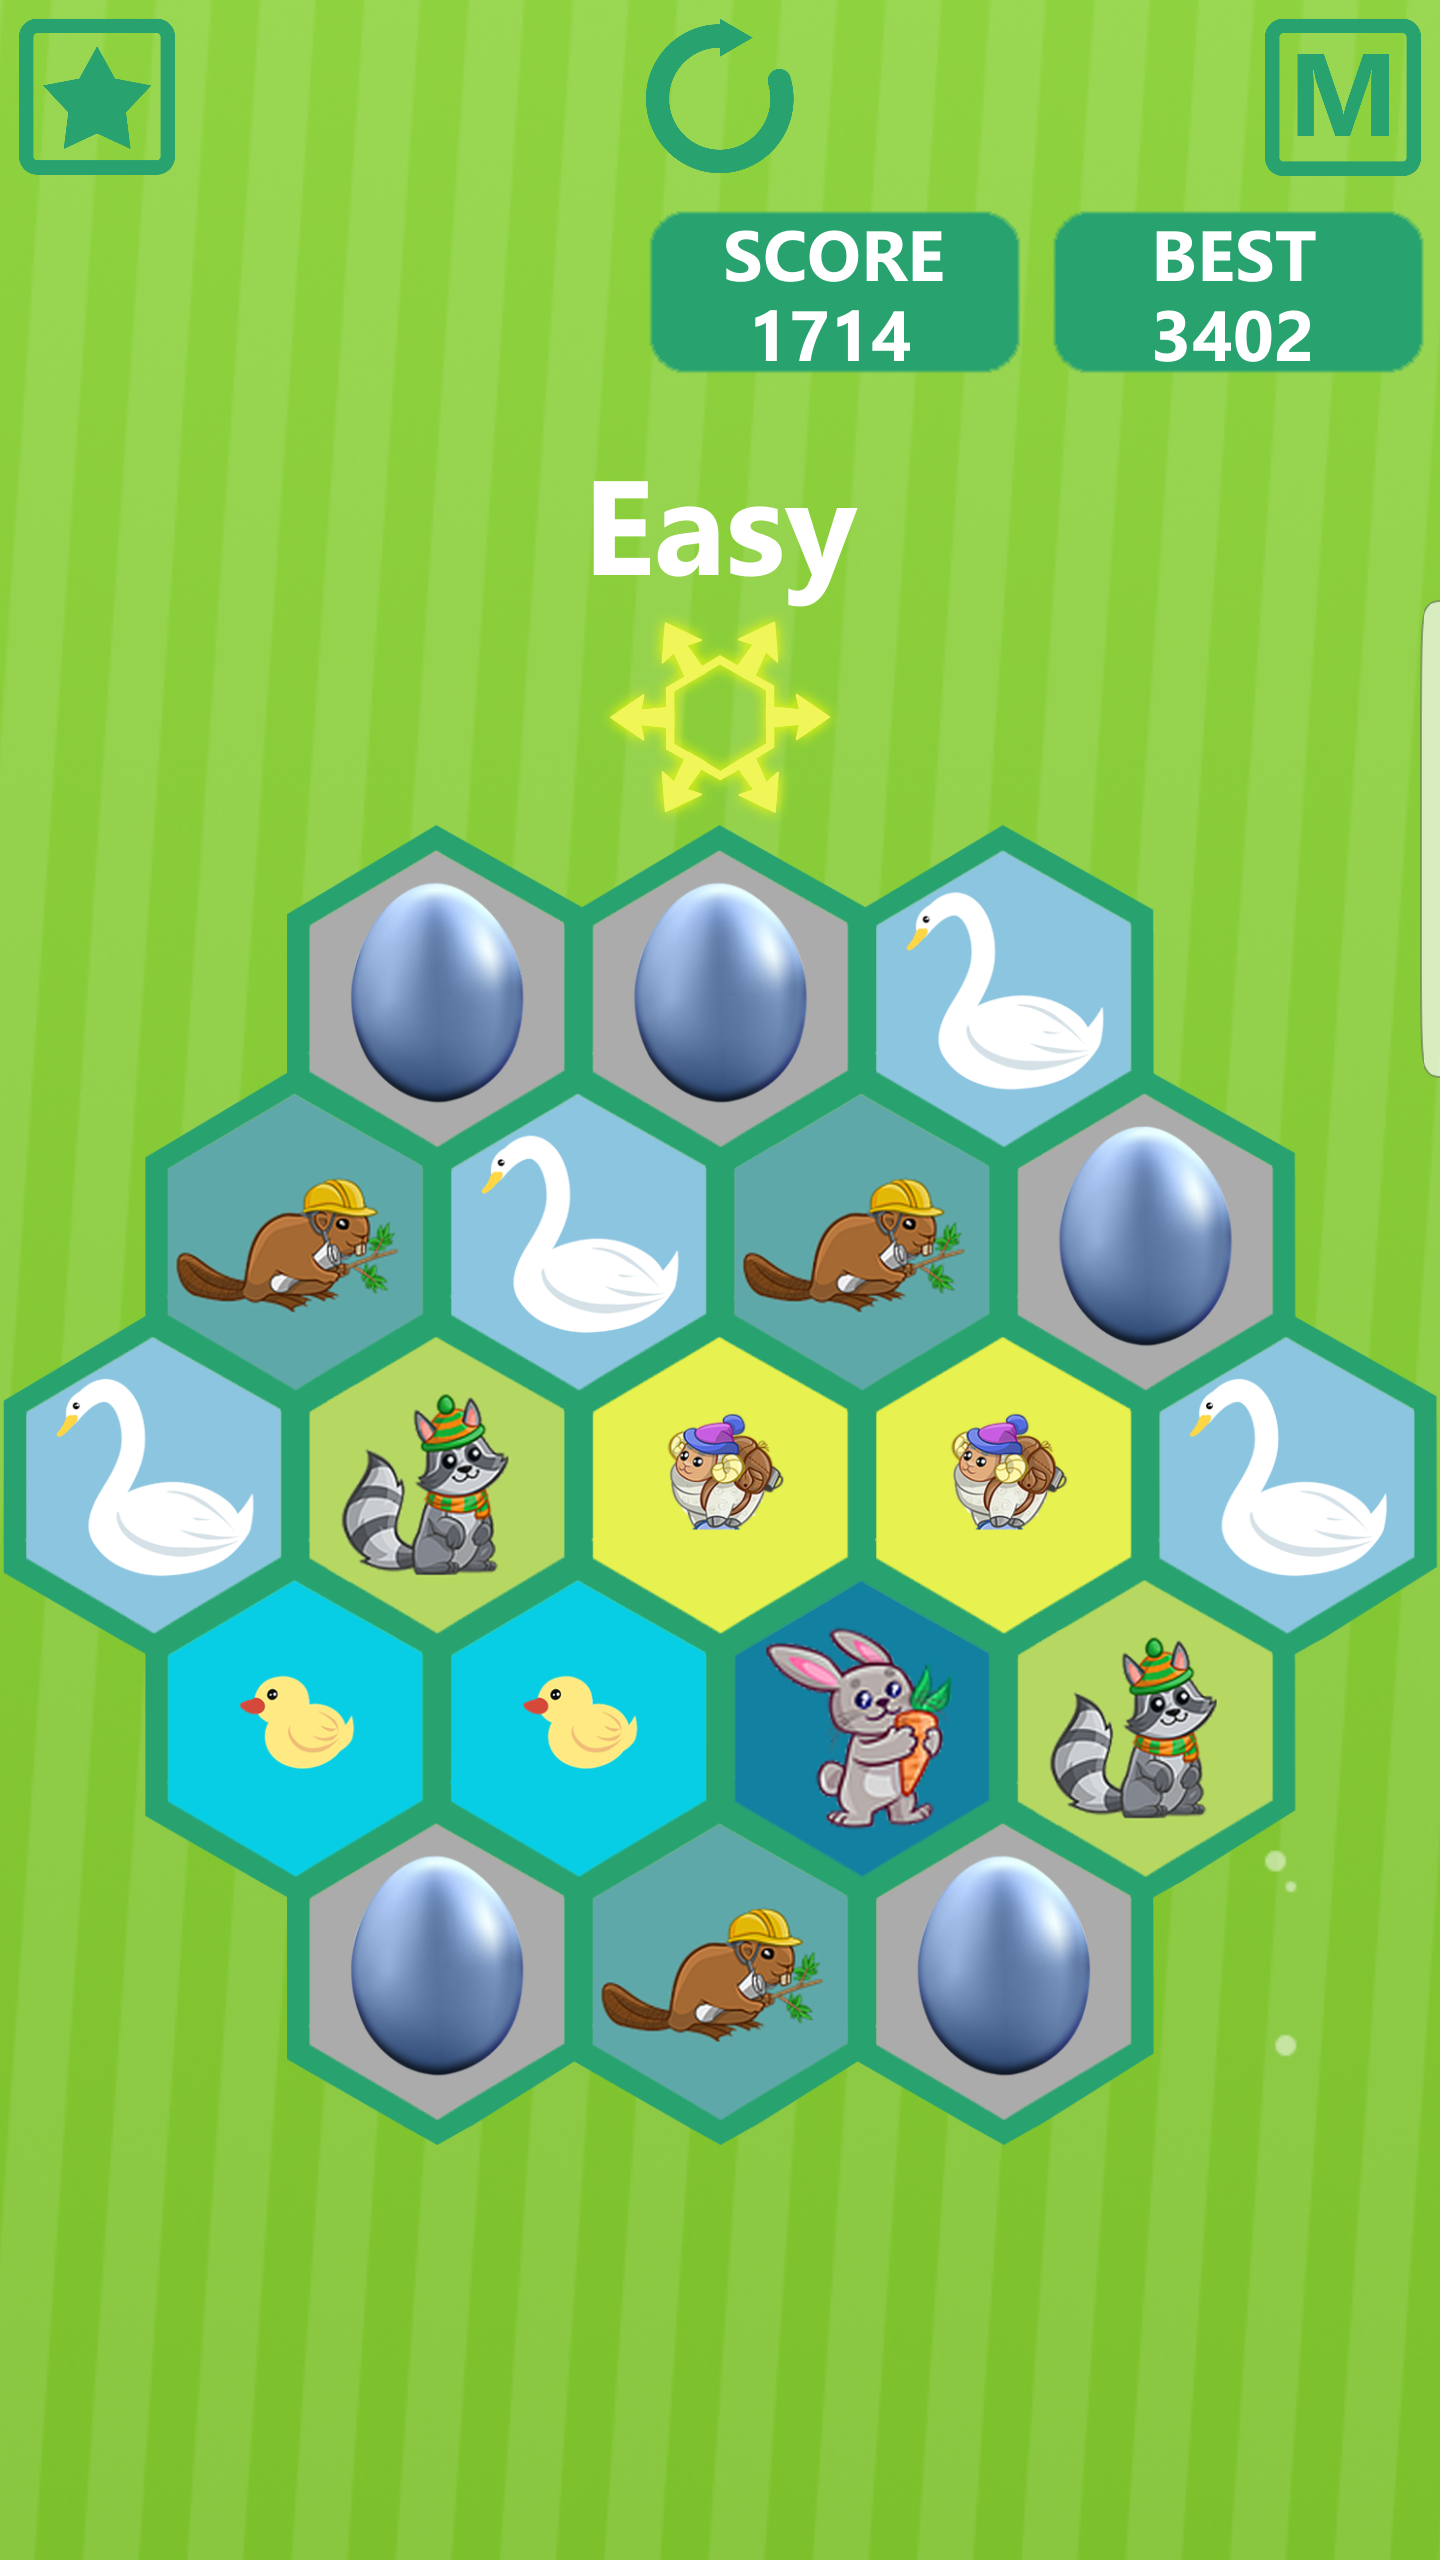 Hexagon animal 2020